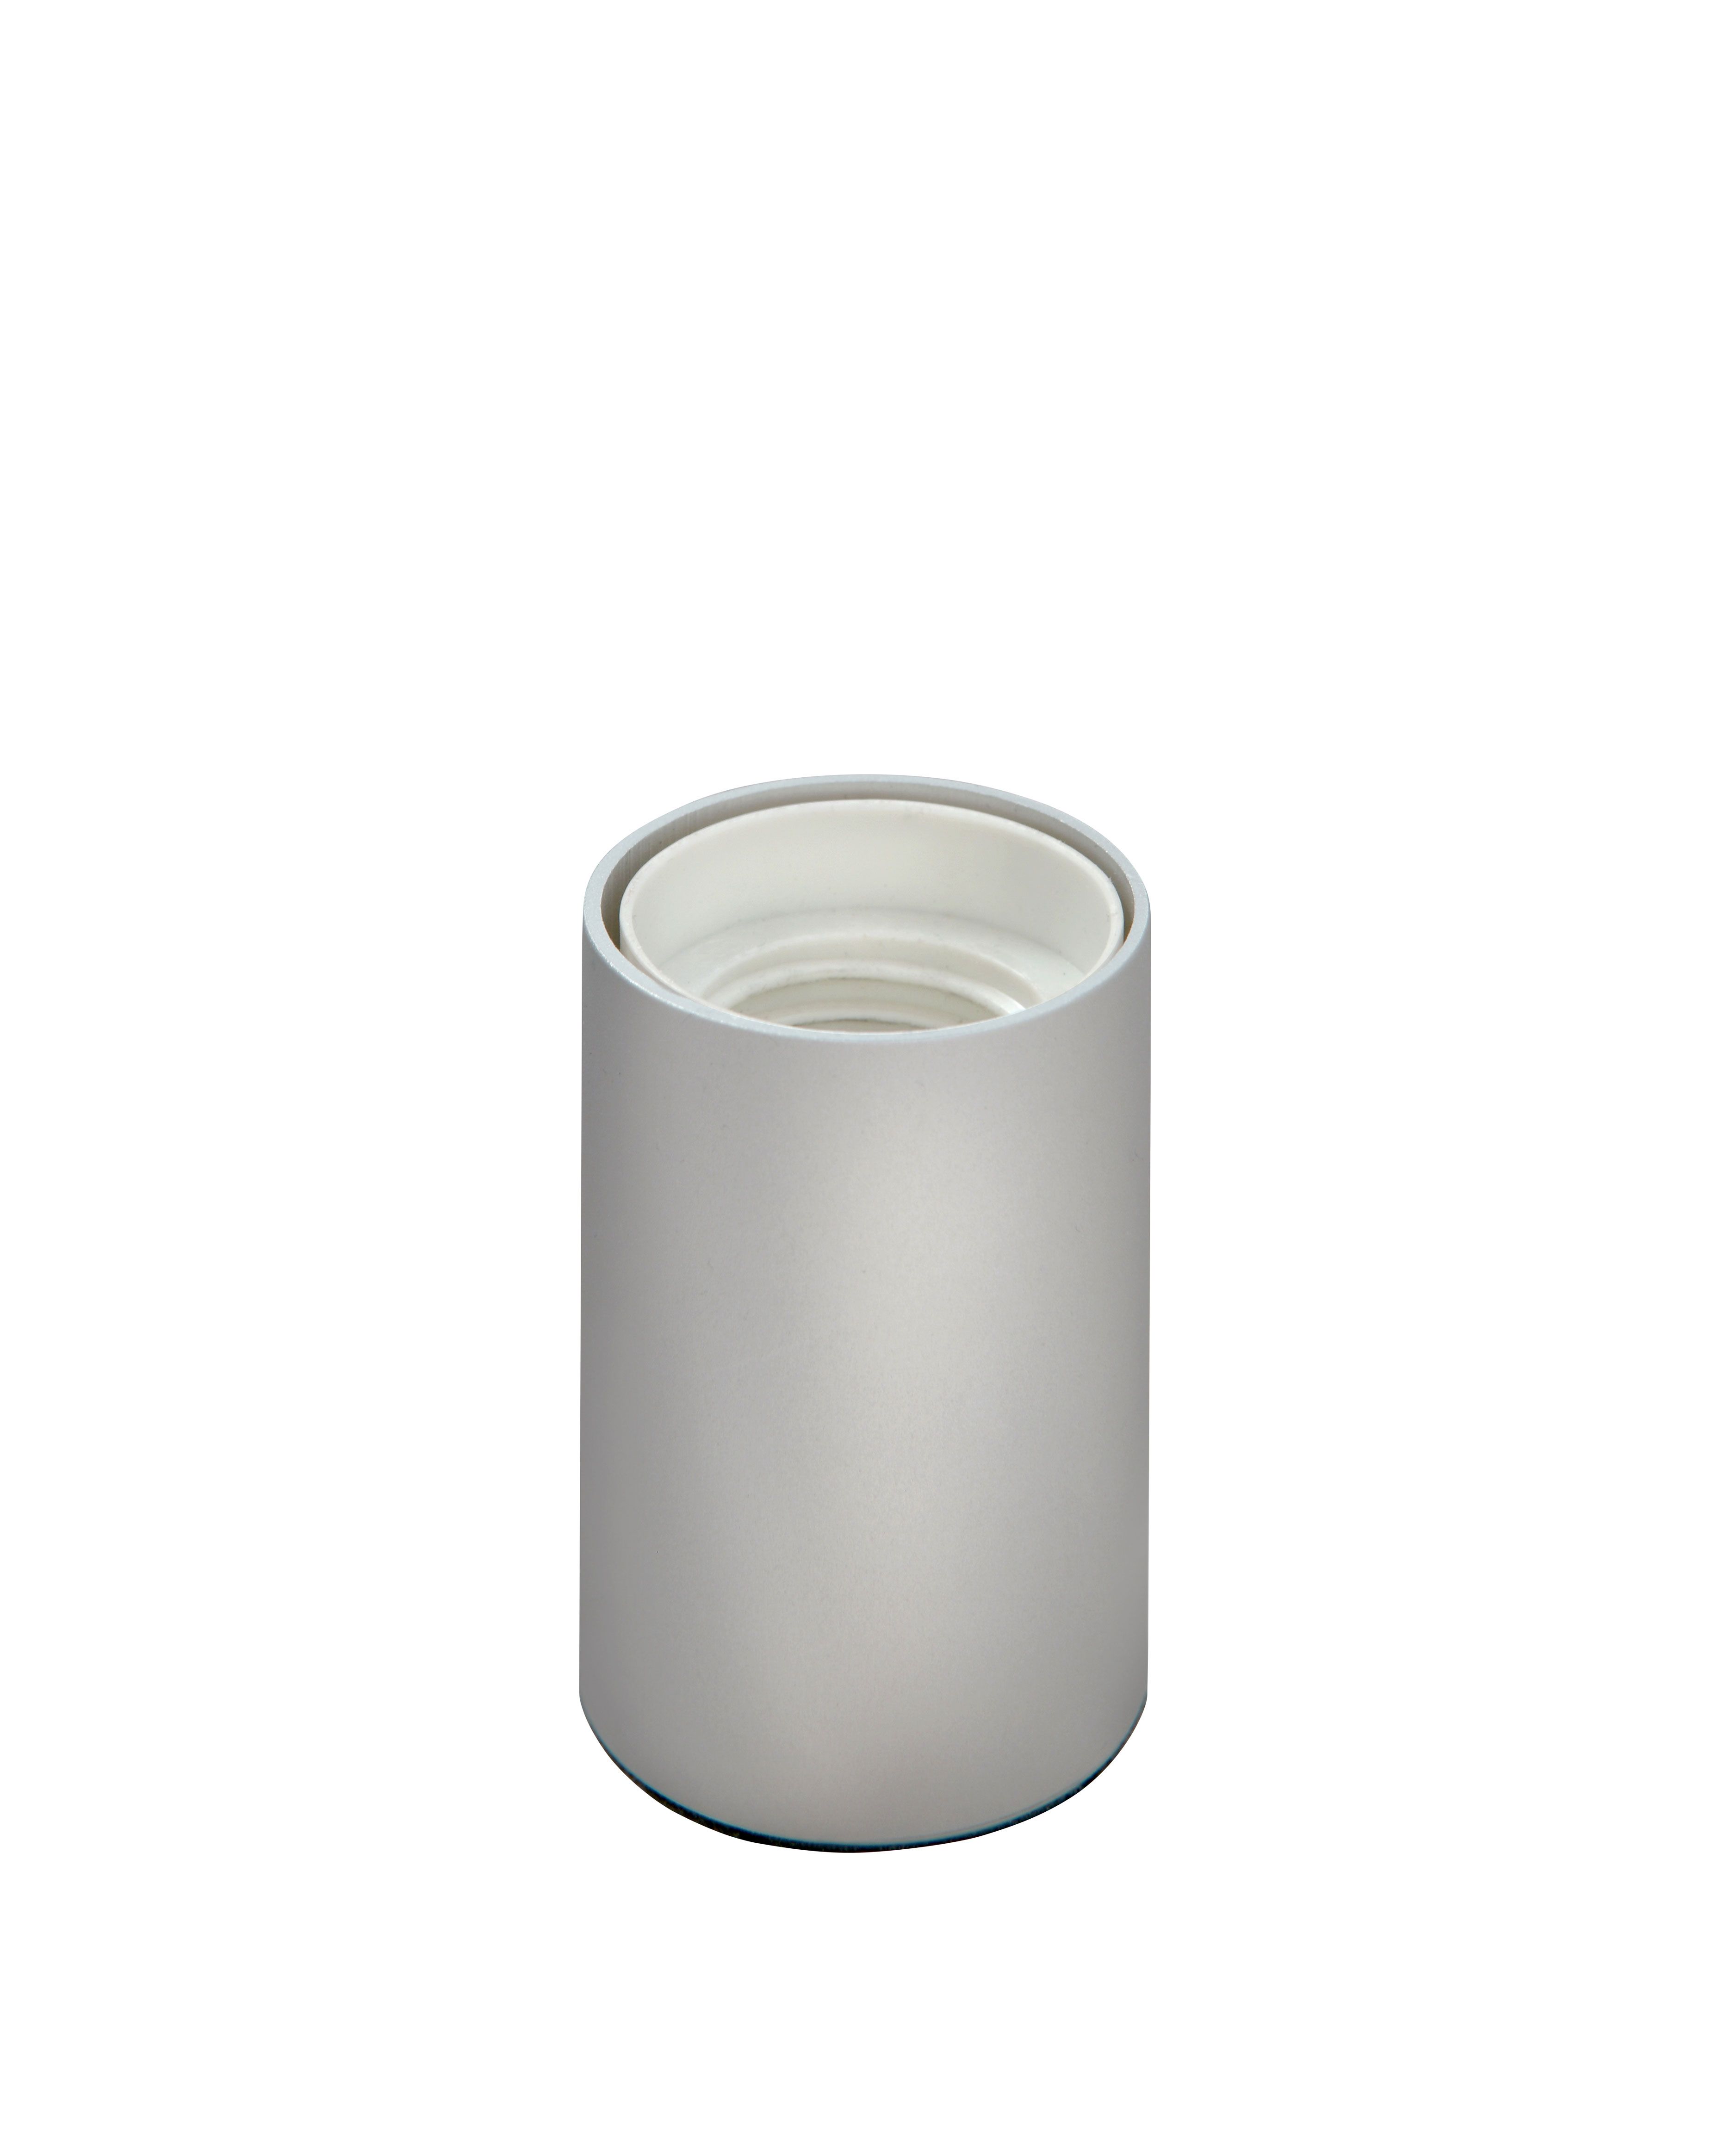 Tobi tafellamp | aluminium | zilver |Ø 4,3 cm | E27 | made by Sompex